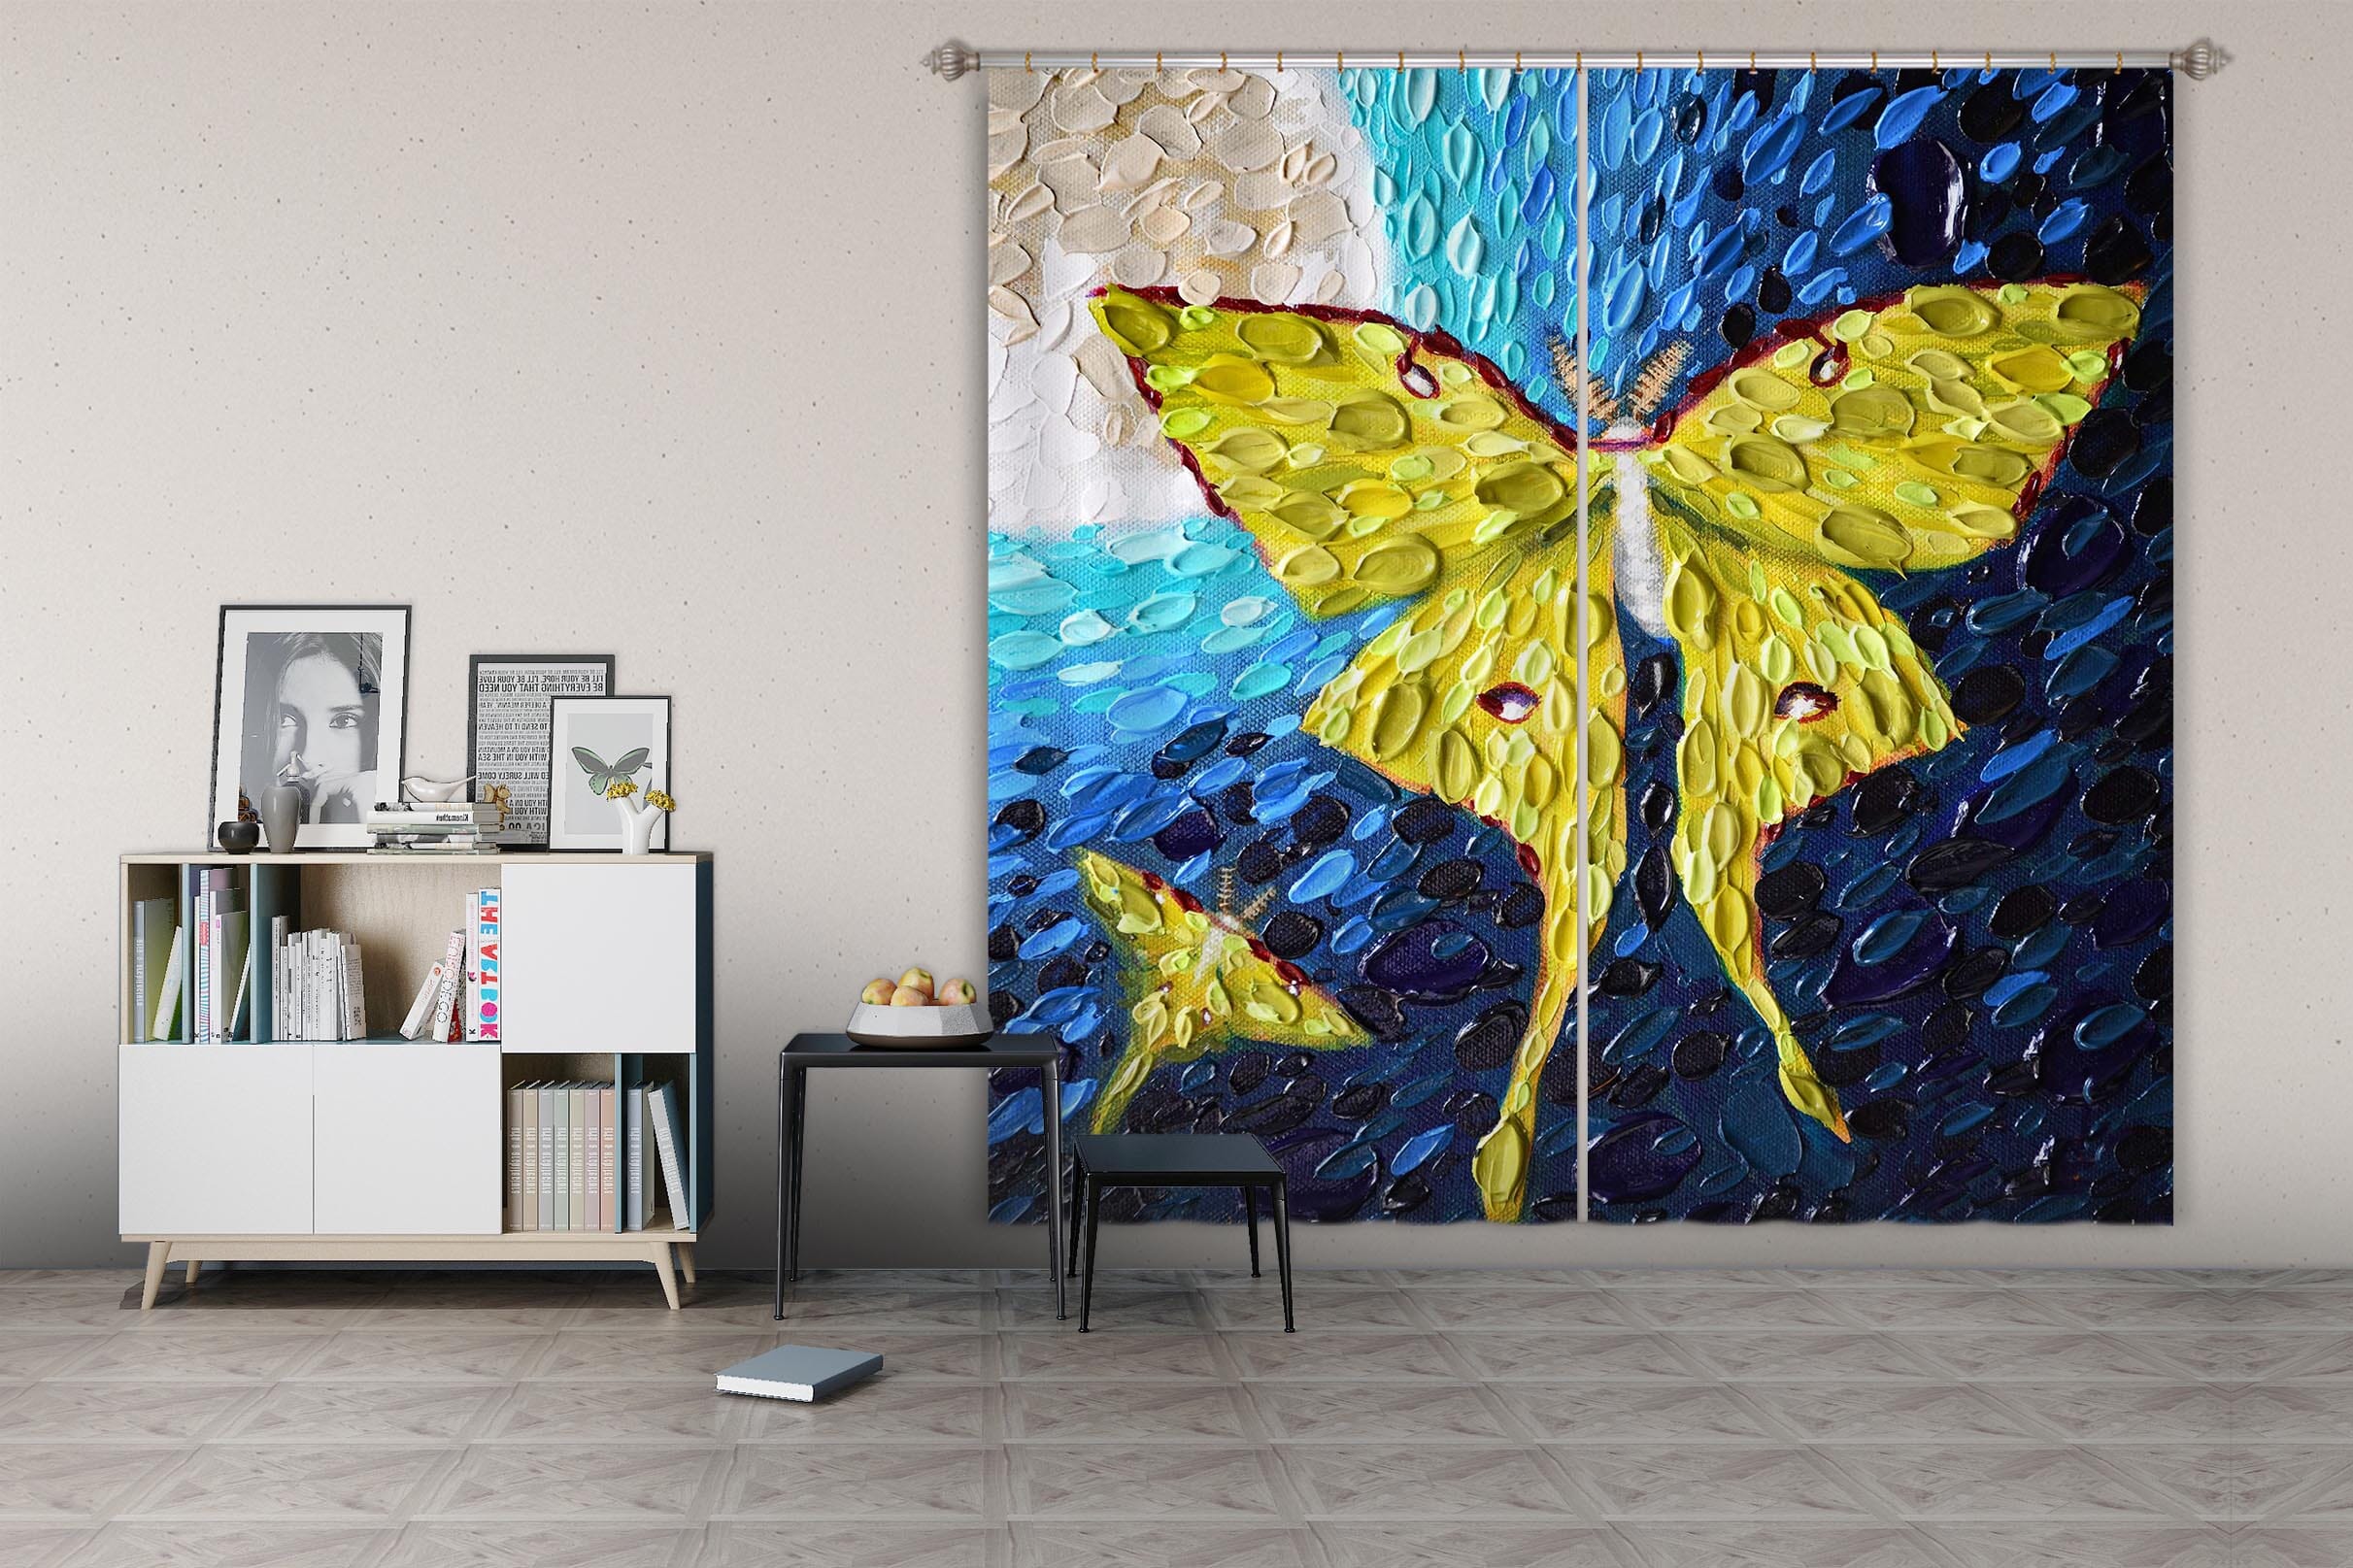 3D Yellow Butterfly 051 Dena Tollefson Curtain Curtains Drapes Curtains AJ Creativity Home 